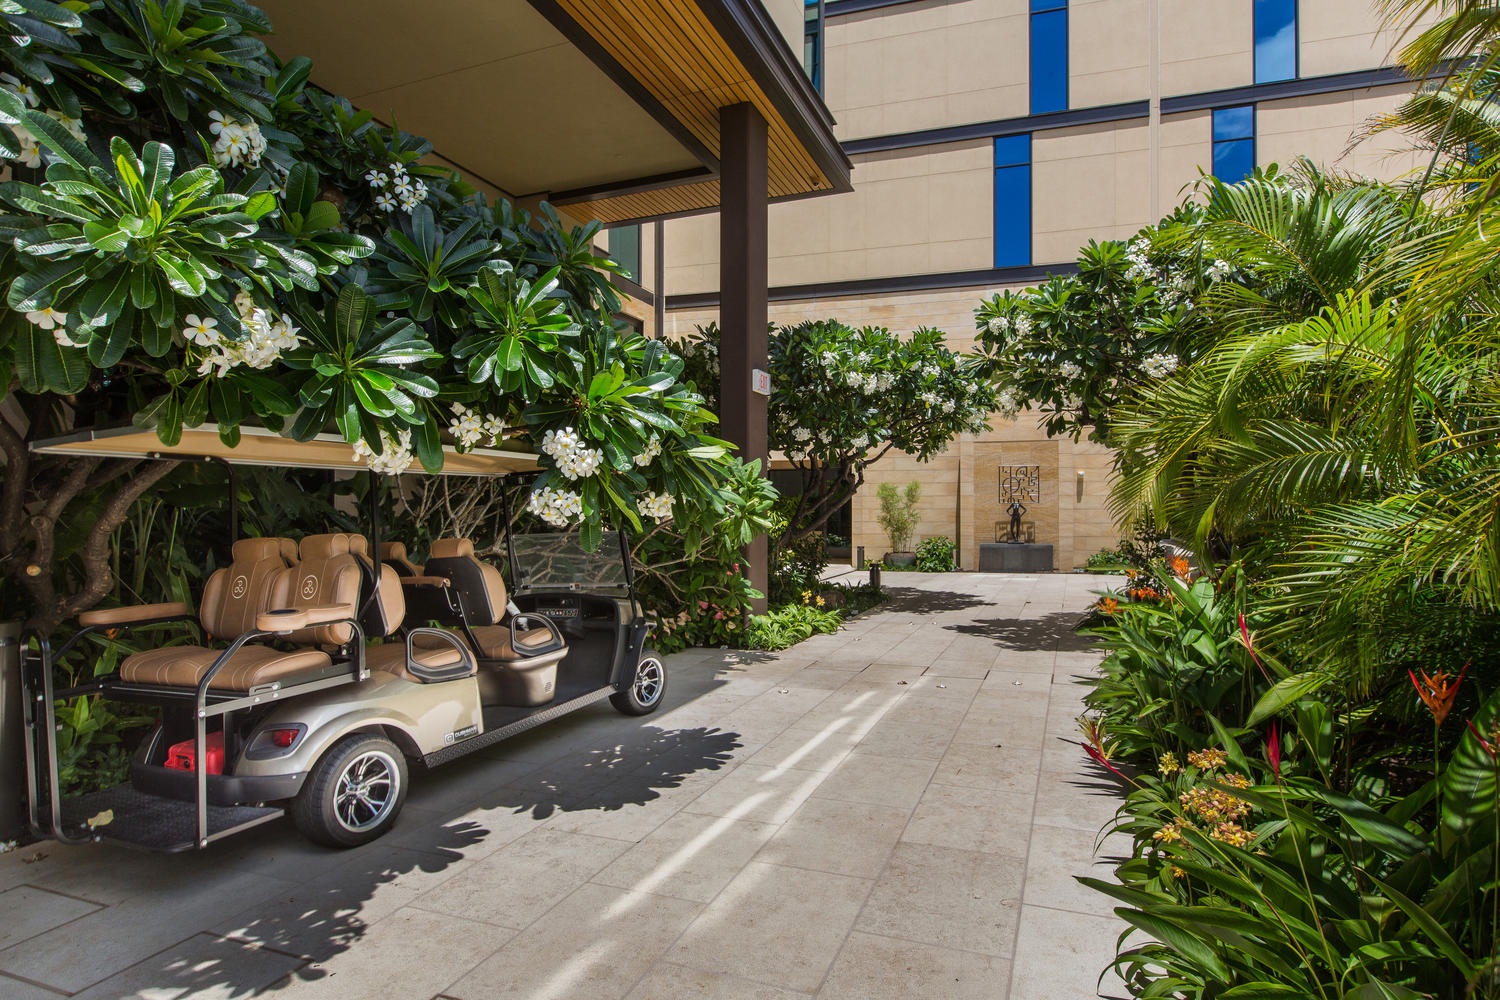 Honolulu Vacation Rentals, Park Lane Sky Resort - Golf cart amenity use for residents